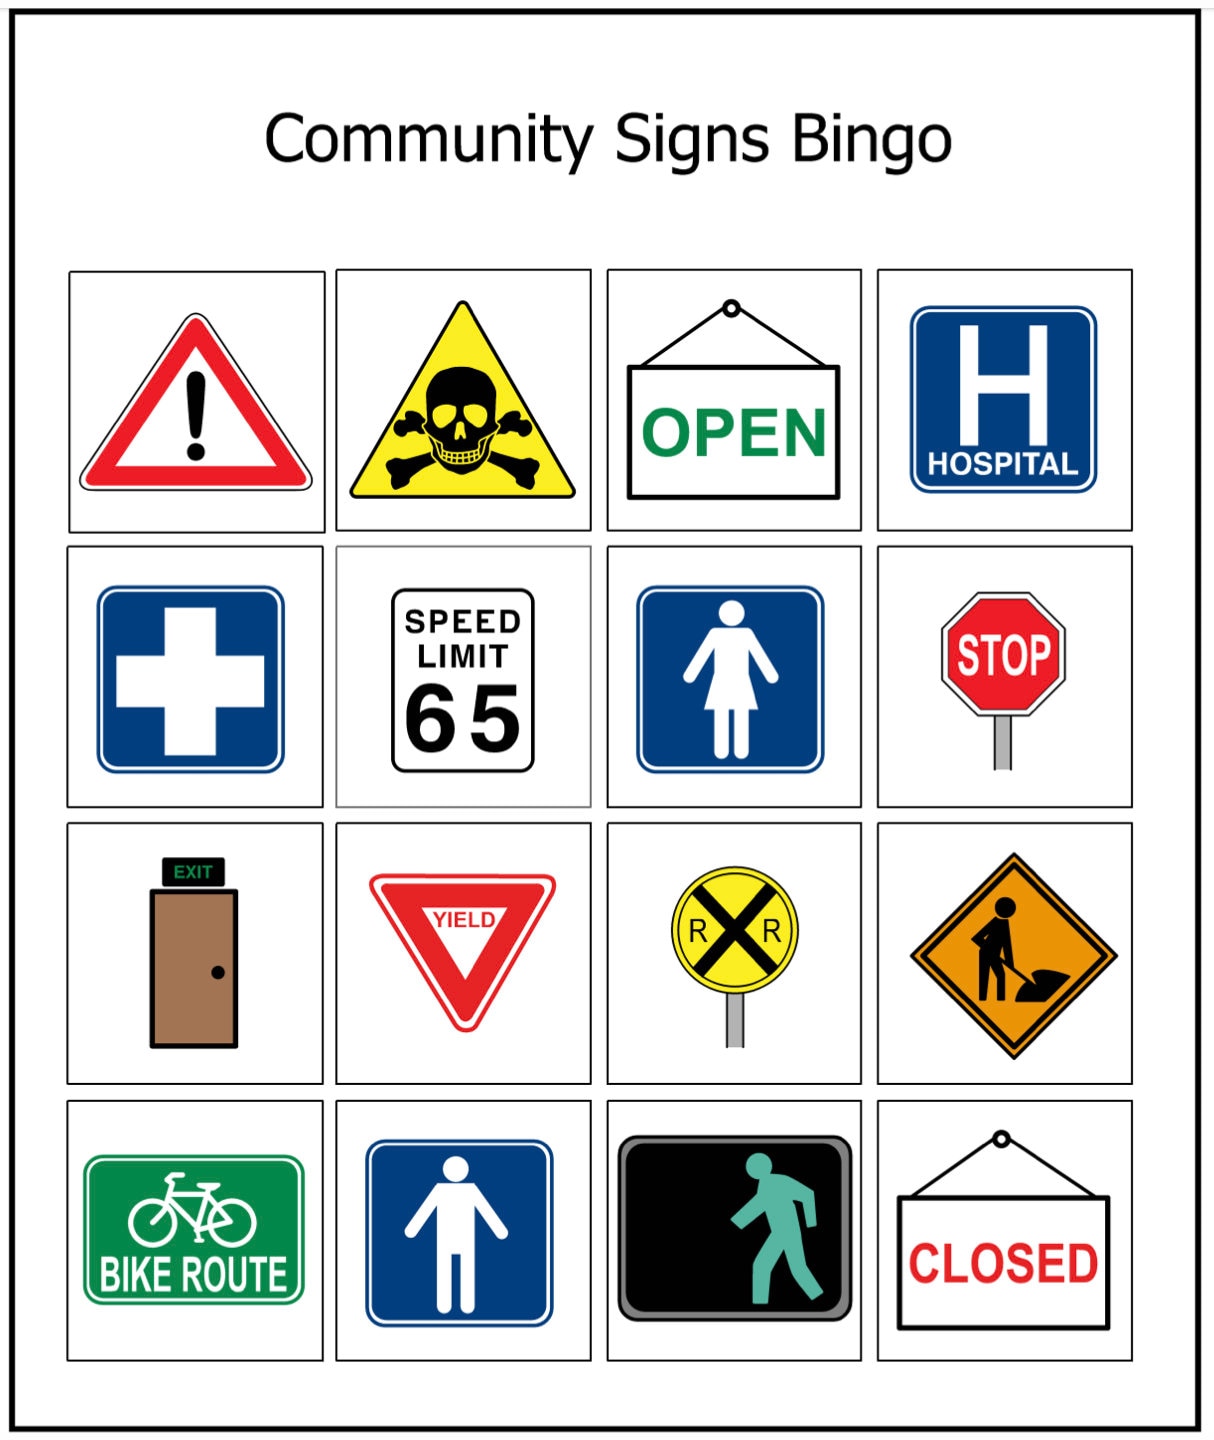 community-signs-bingo-safety-sign-bingo-game-learning-etsy